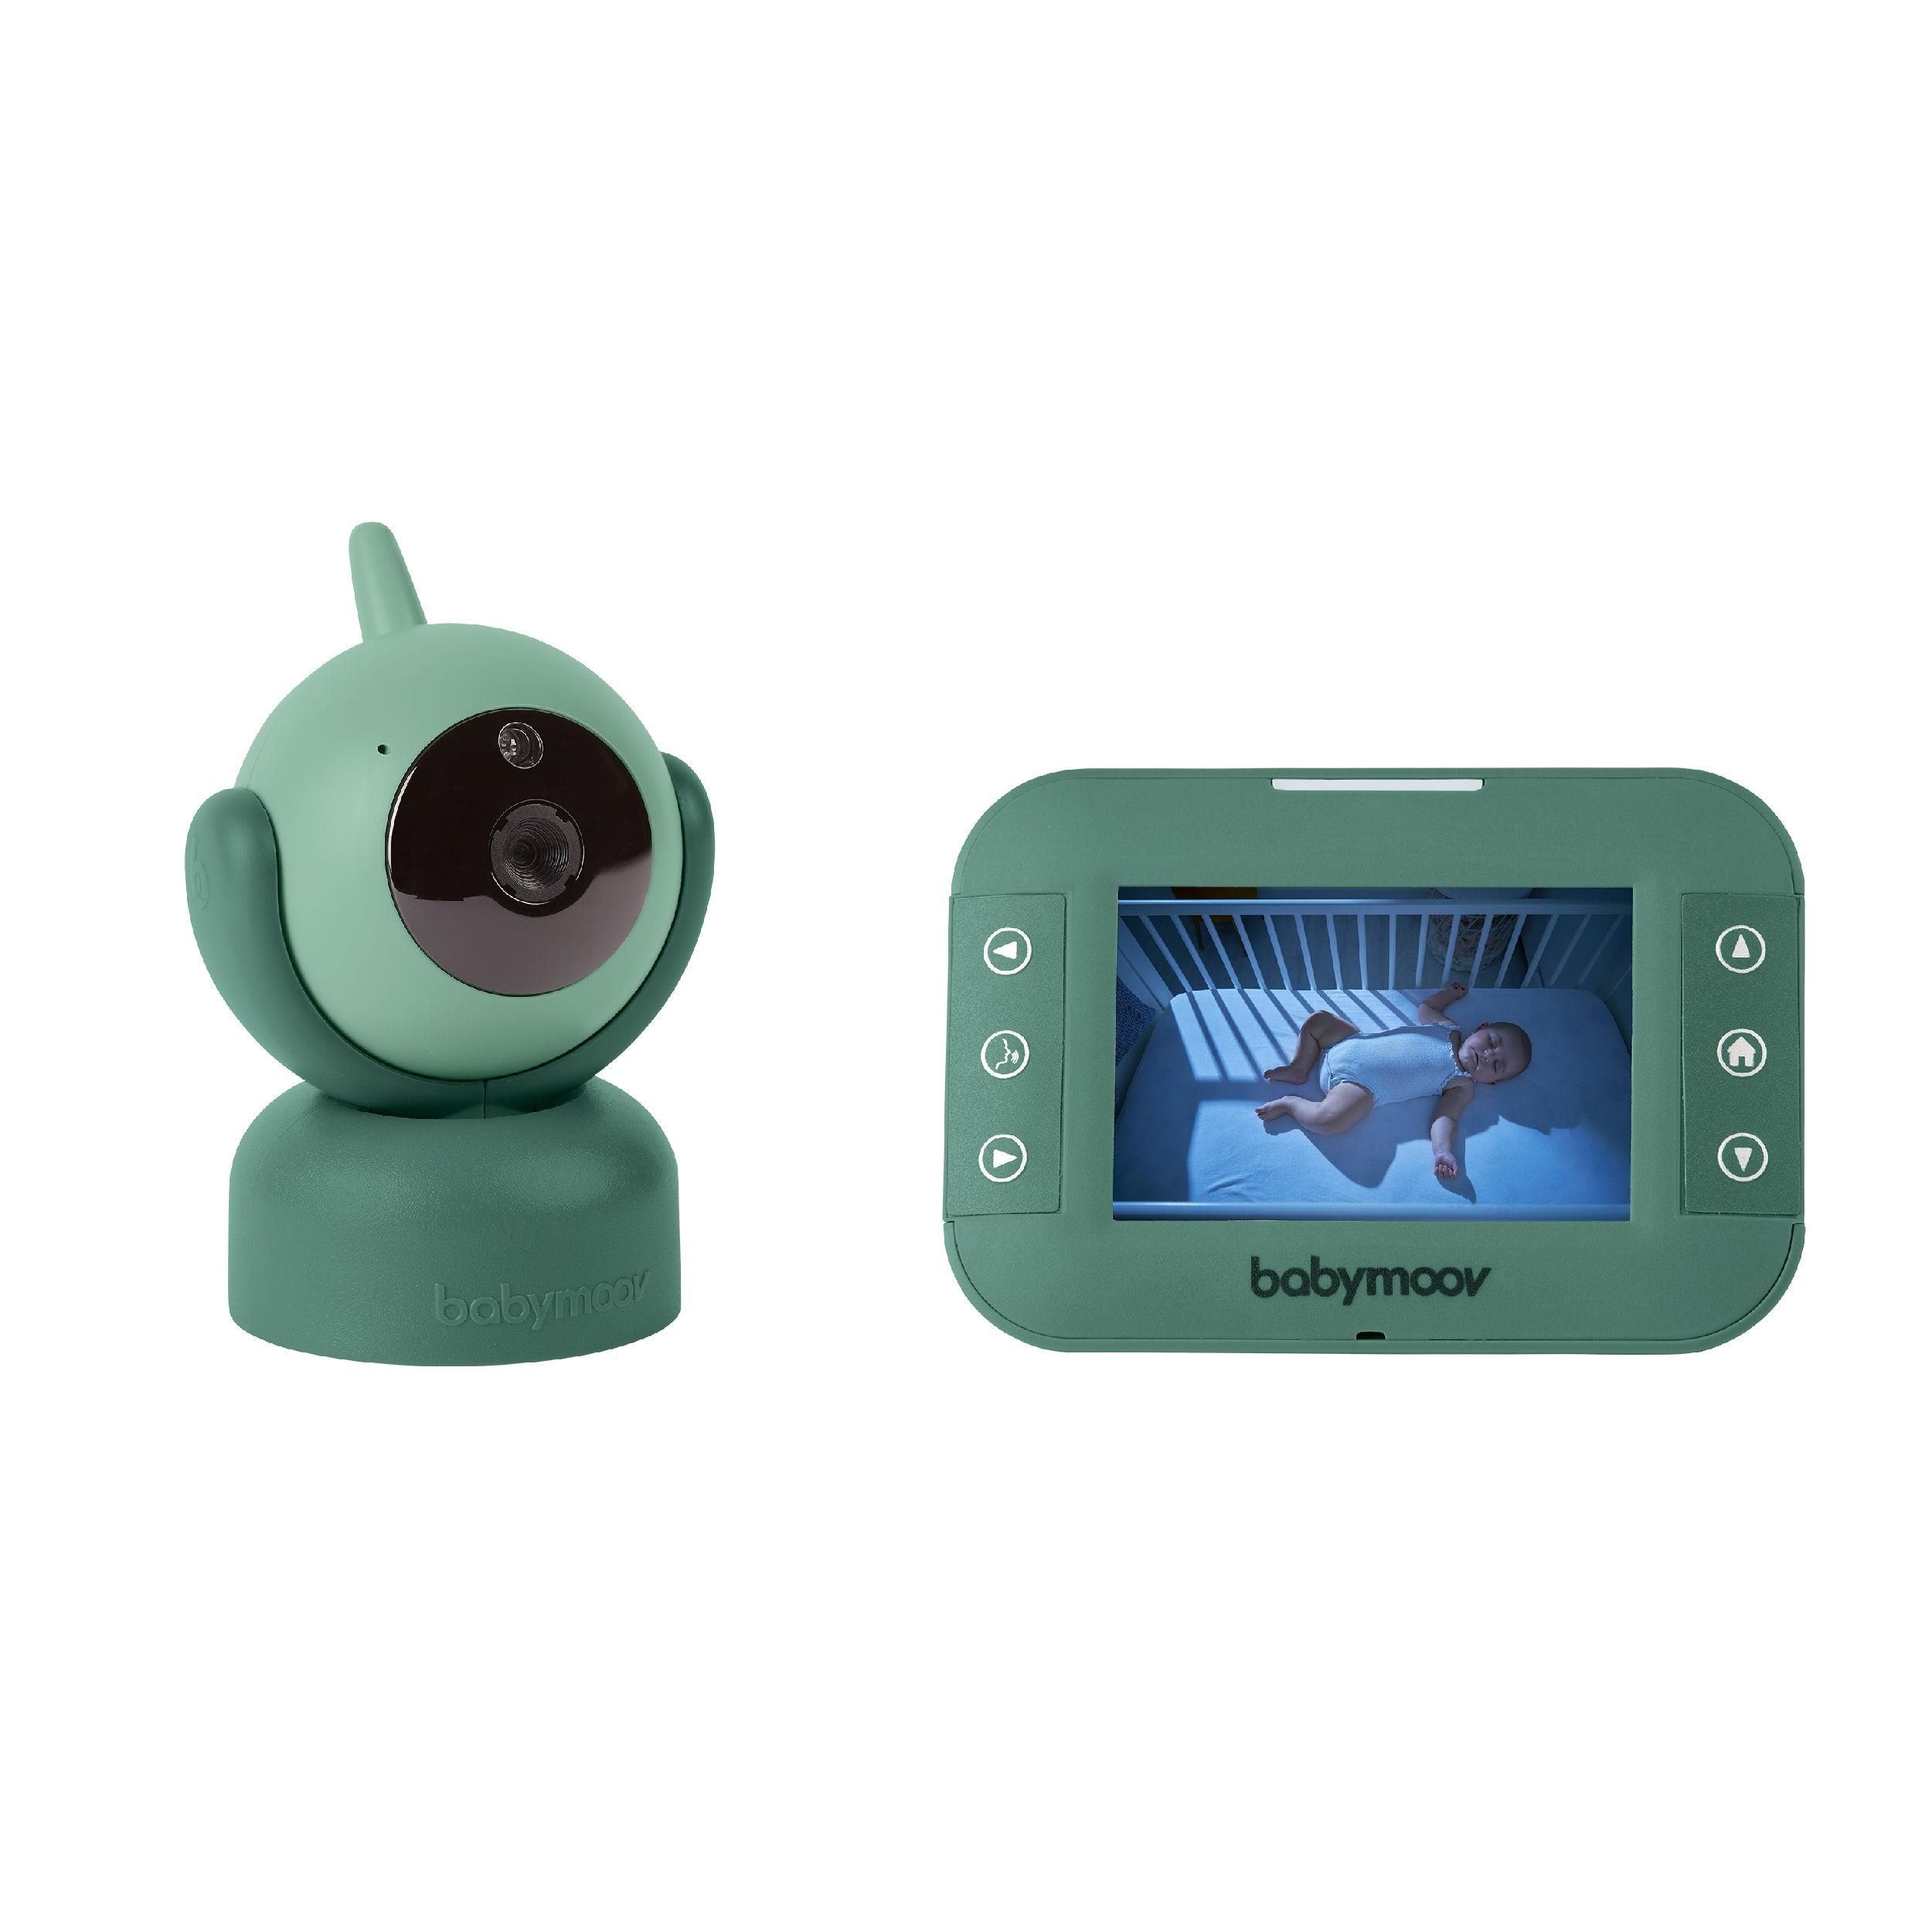 Babymoov YOO Master Digital Baby Video Monitor with 3.5 Screen – Mari Kali  Stores Cyprus